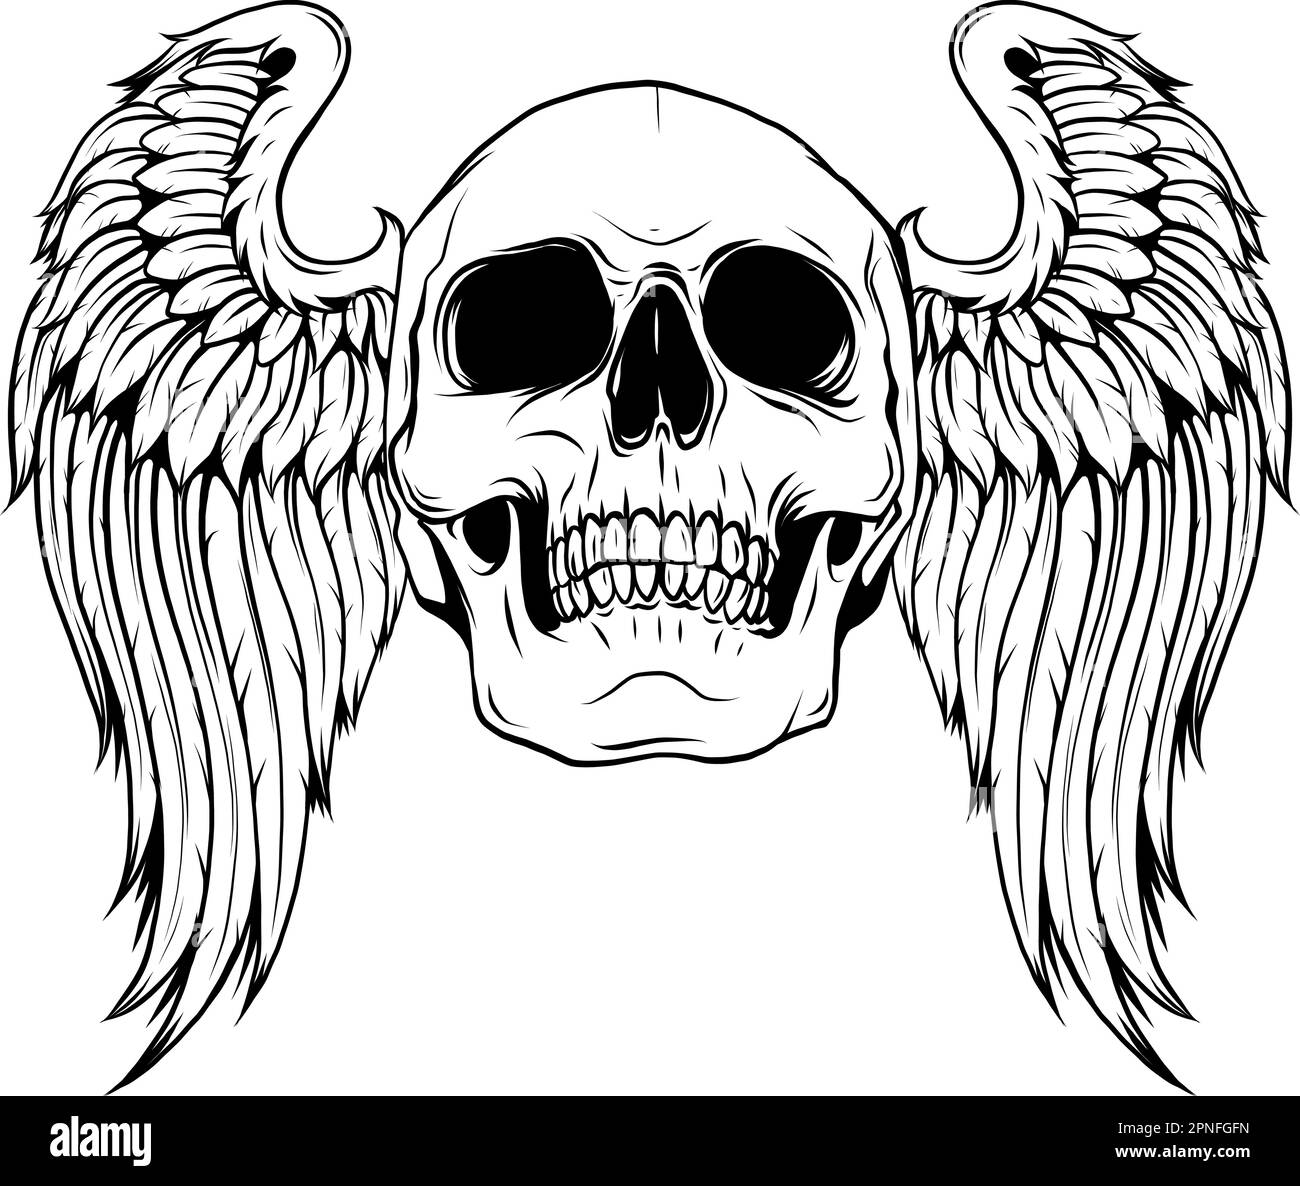 Skull Wings Silhouette Outline Drawing vector illustration Stock Vector